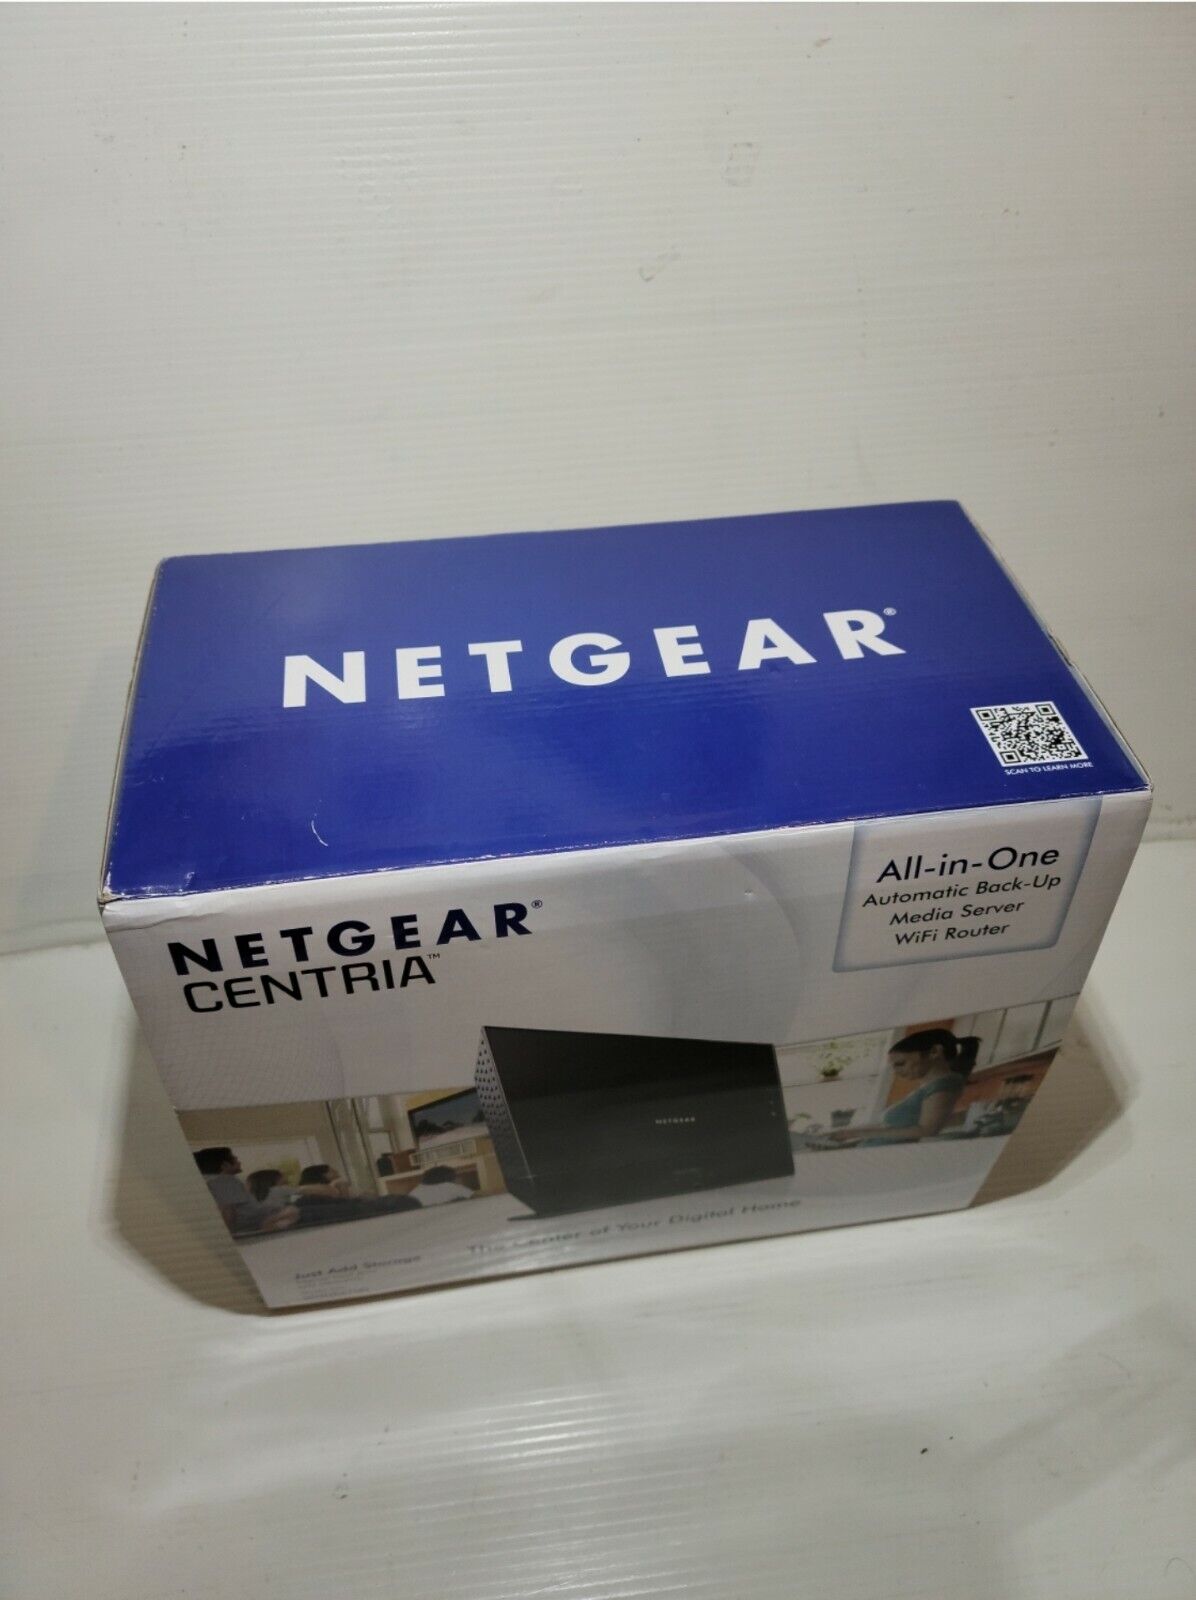 Netgear Centria Model WNDR4700 Server WiFi Storage Router 